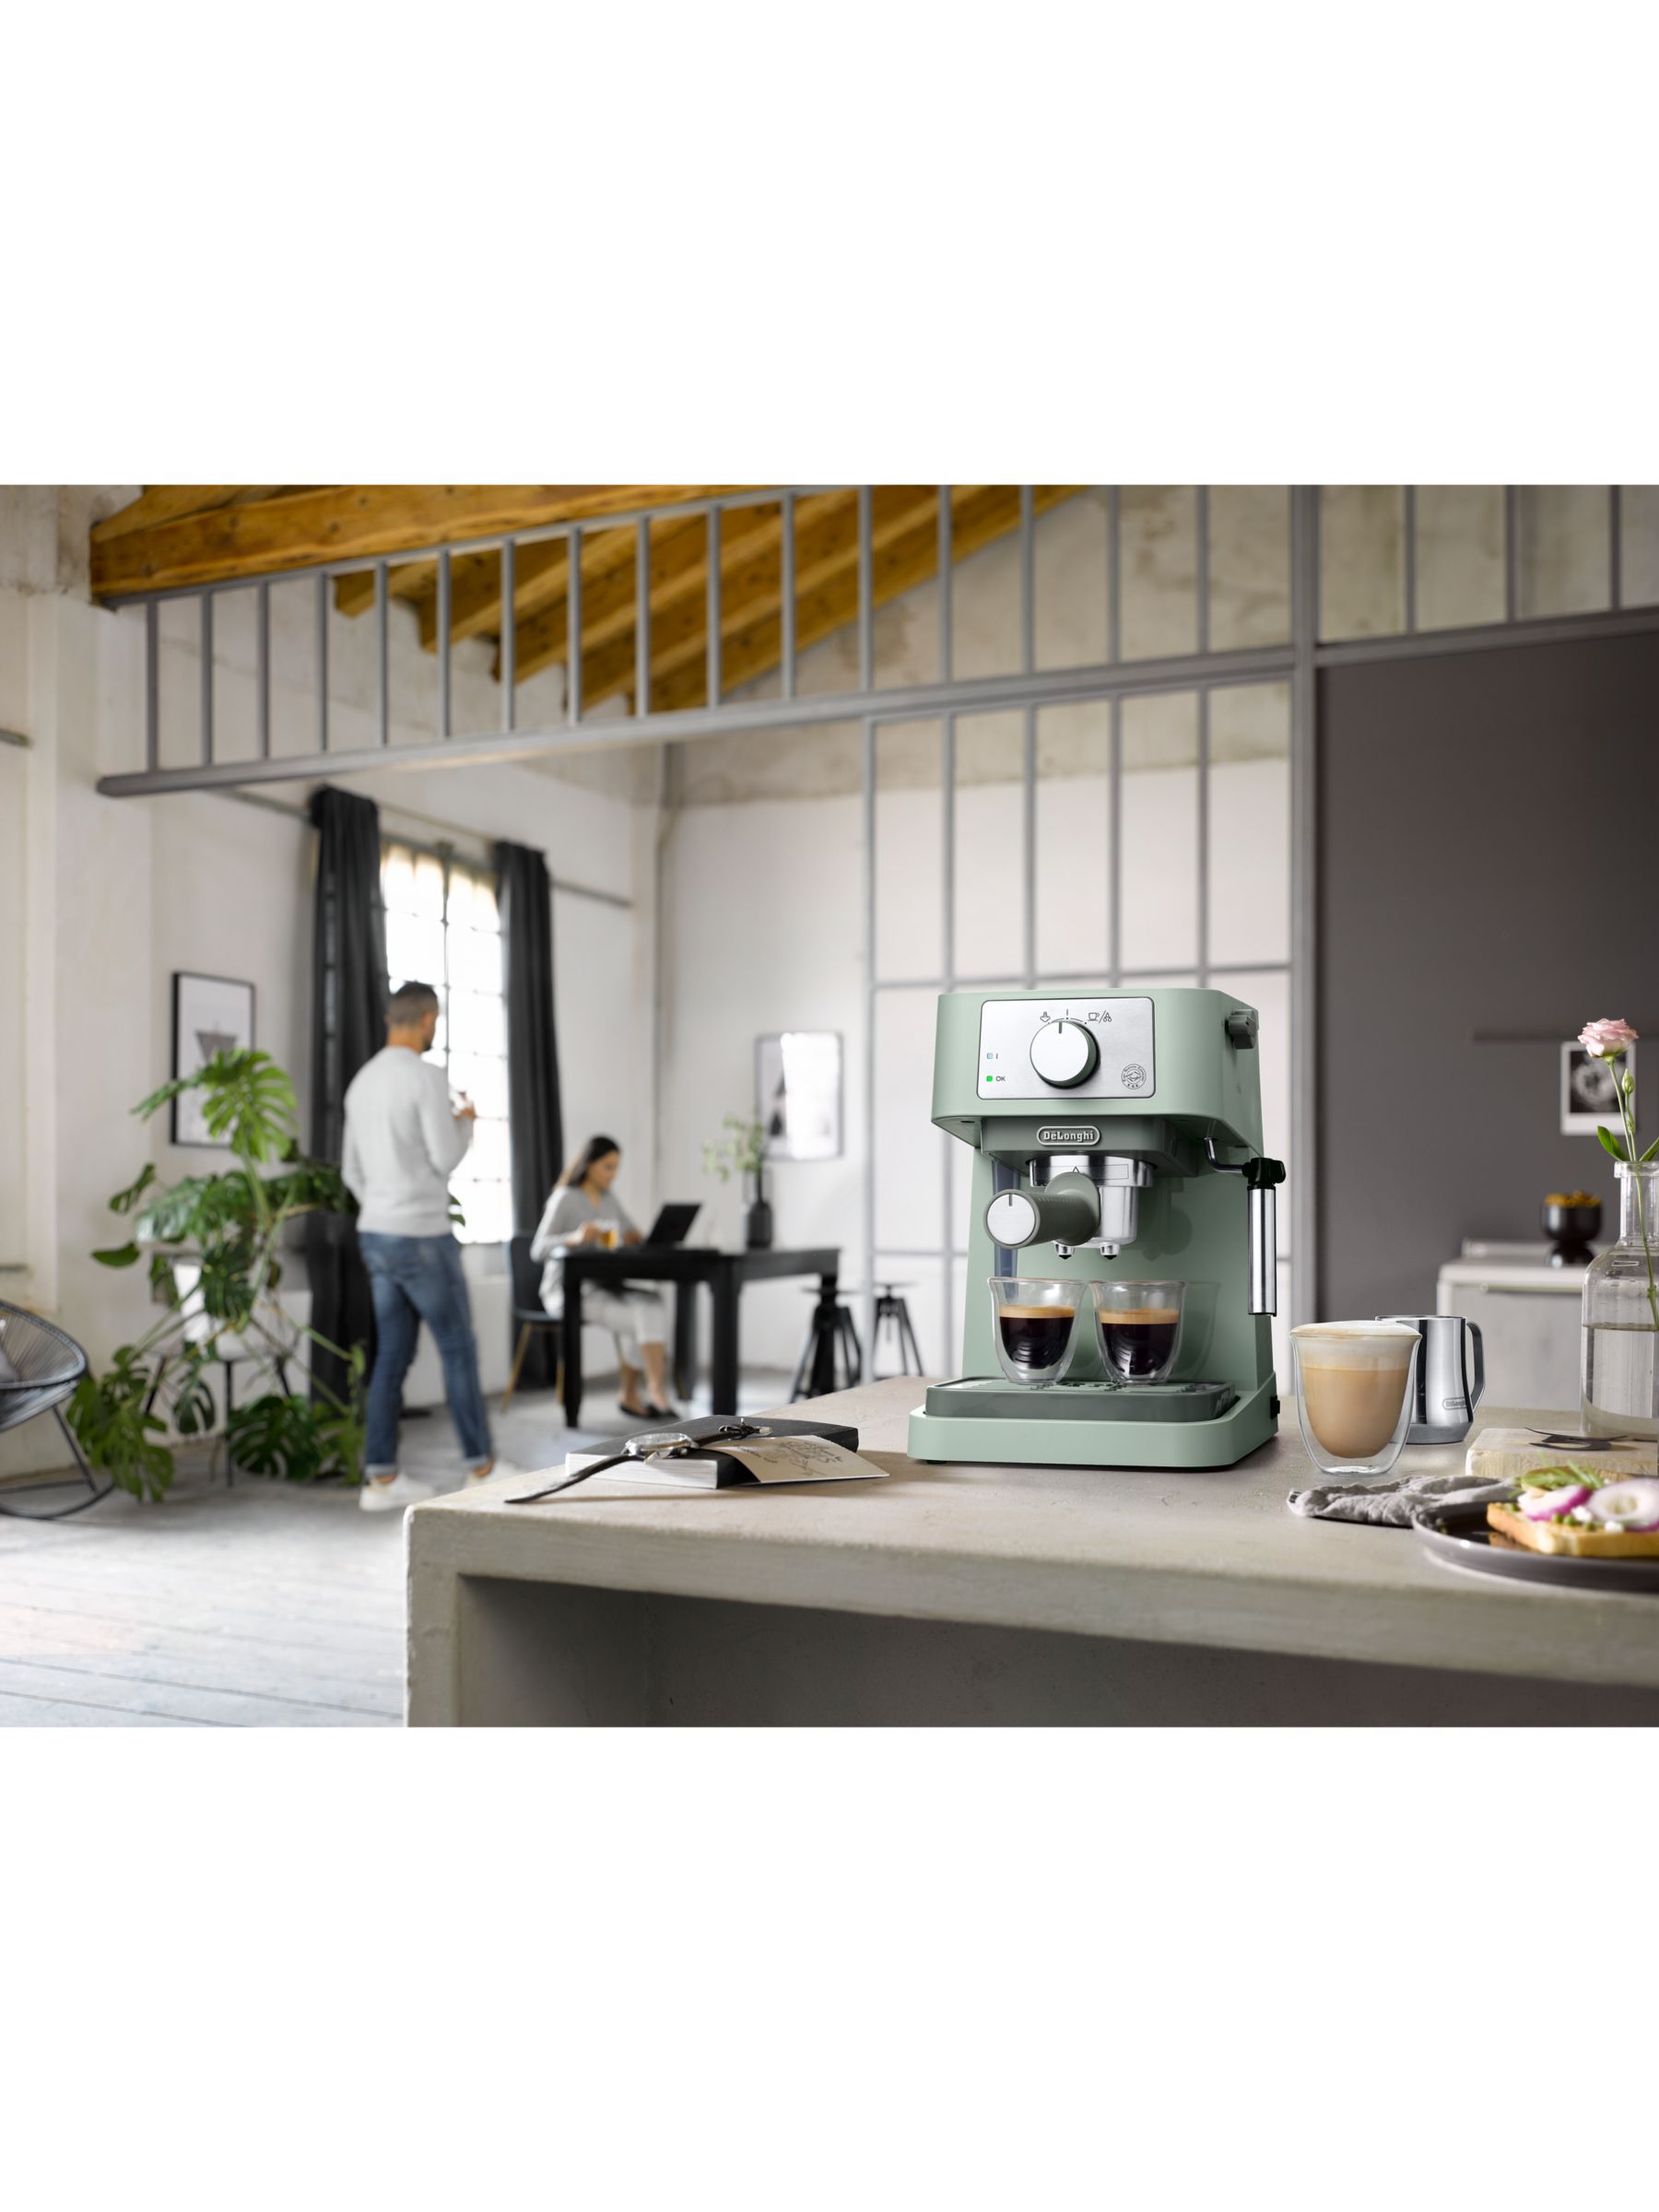 Delonghi stilosa coffee machine, TV & Home Appliances, Kitchen